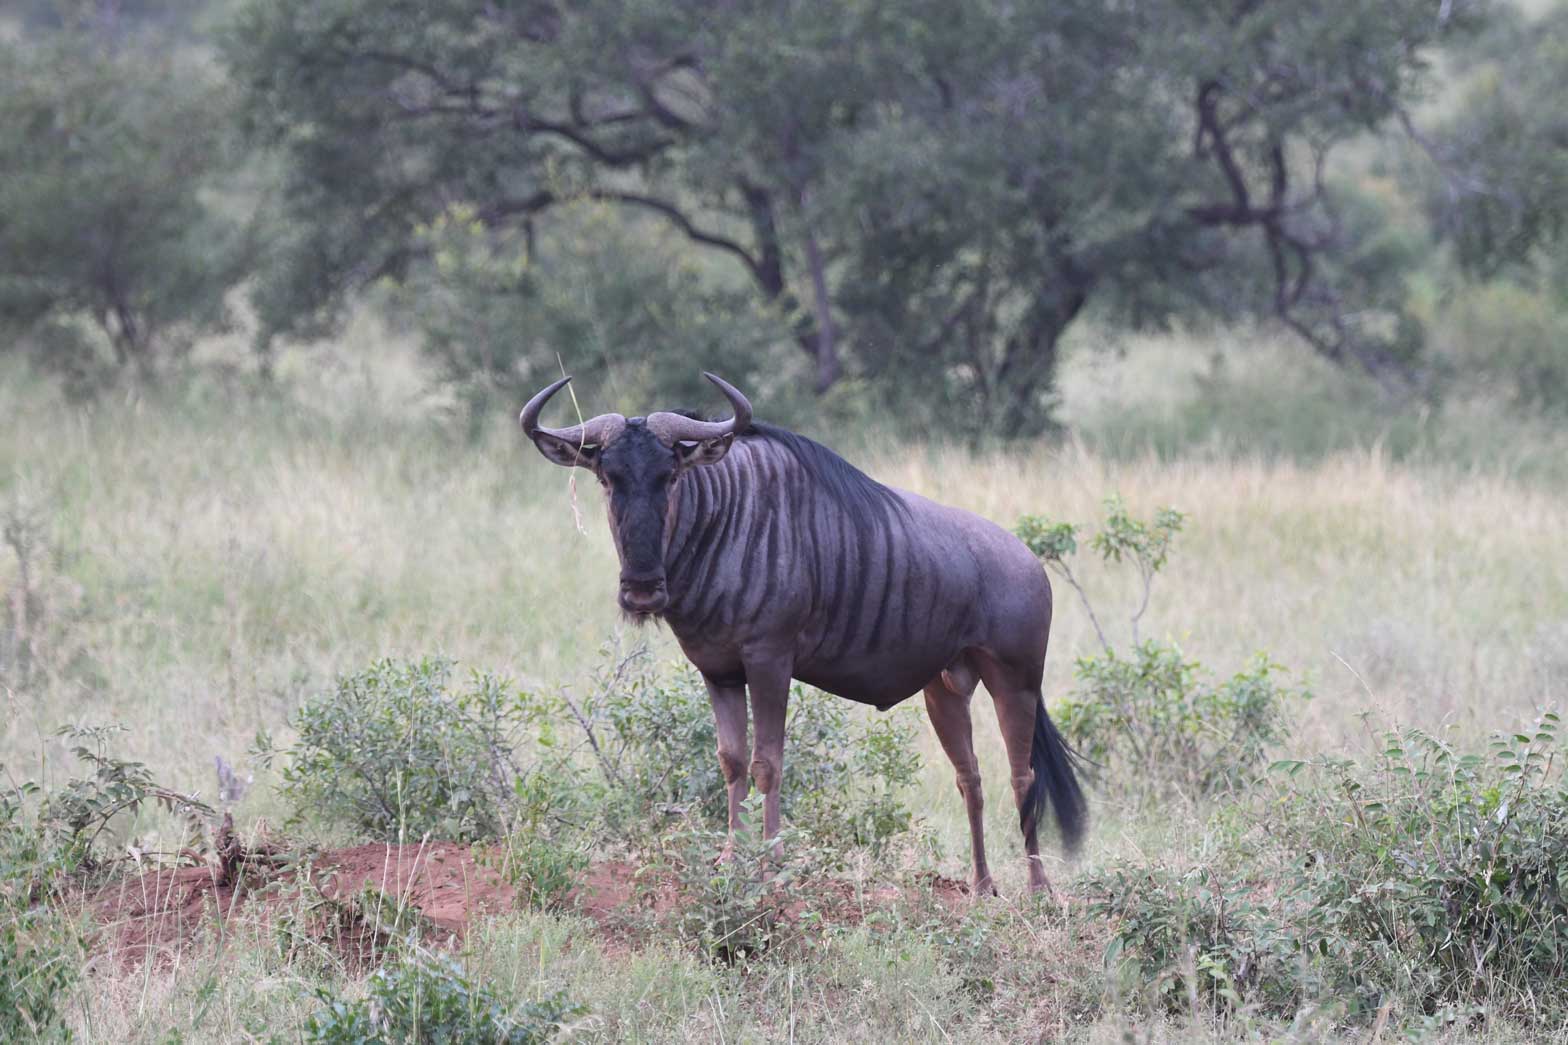 Wildebeest checking its surroundings